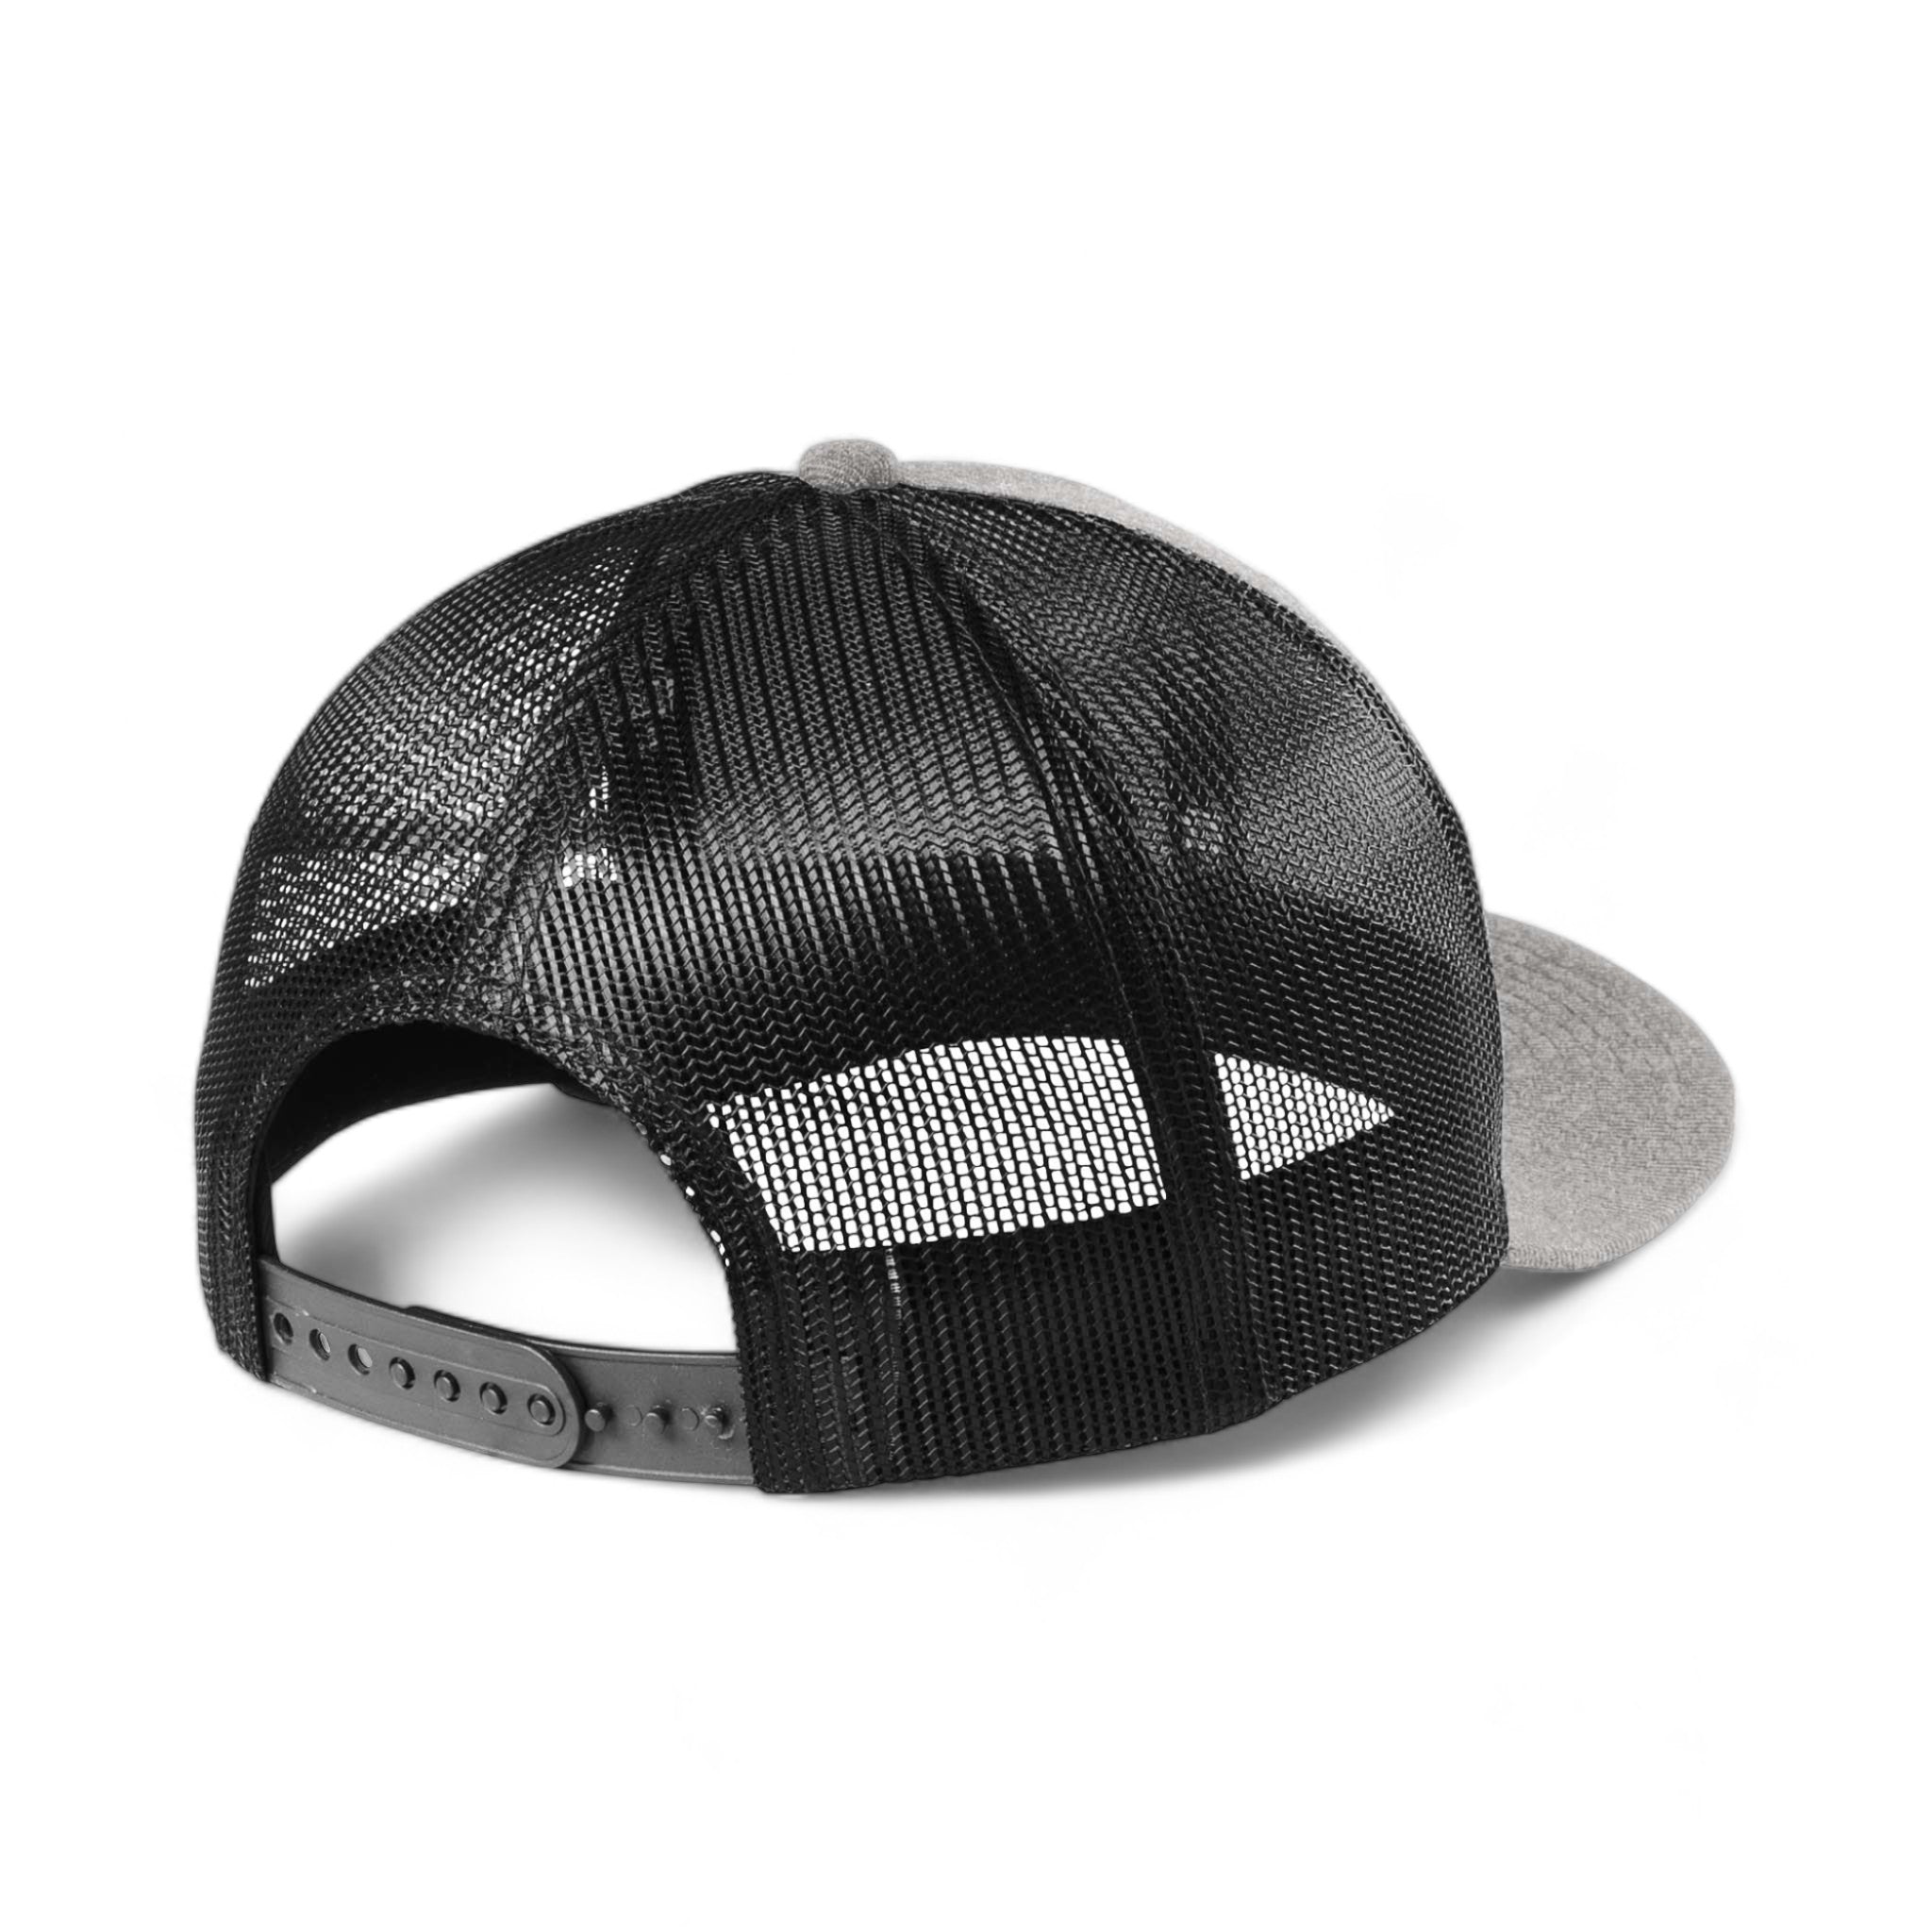 Back view of New Era NE207 custom hat in heather grey and black